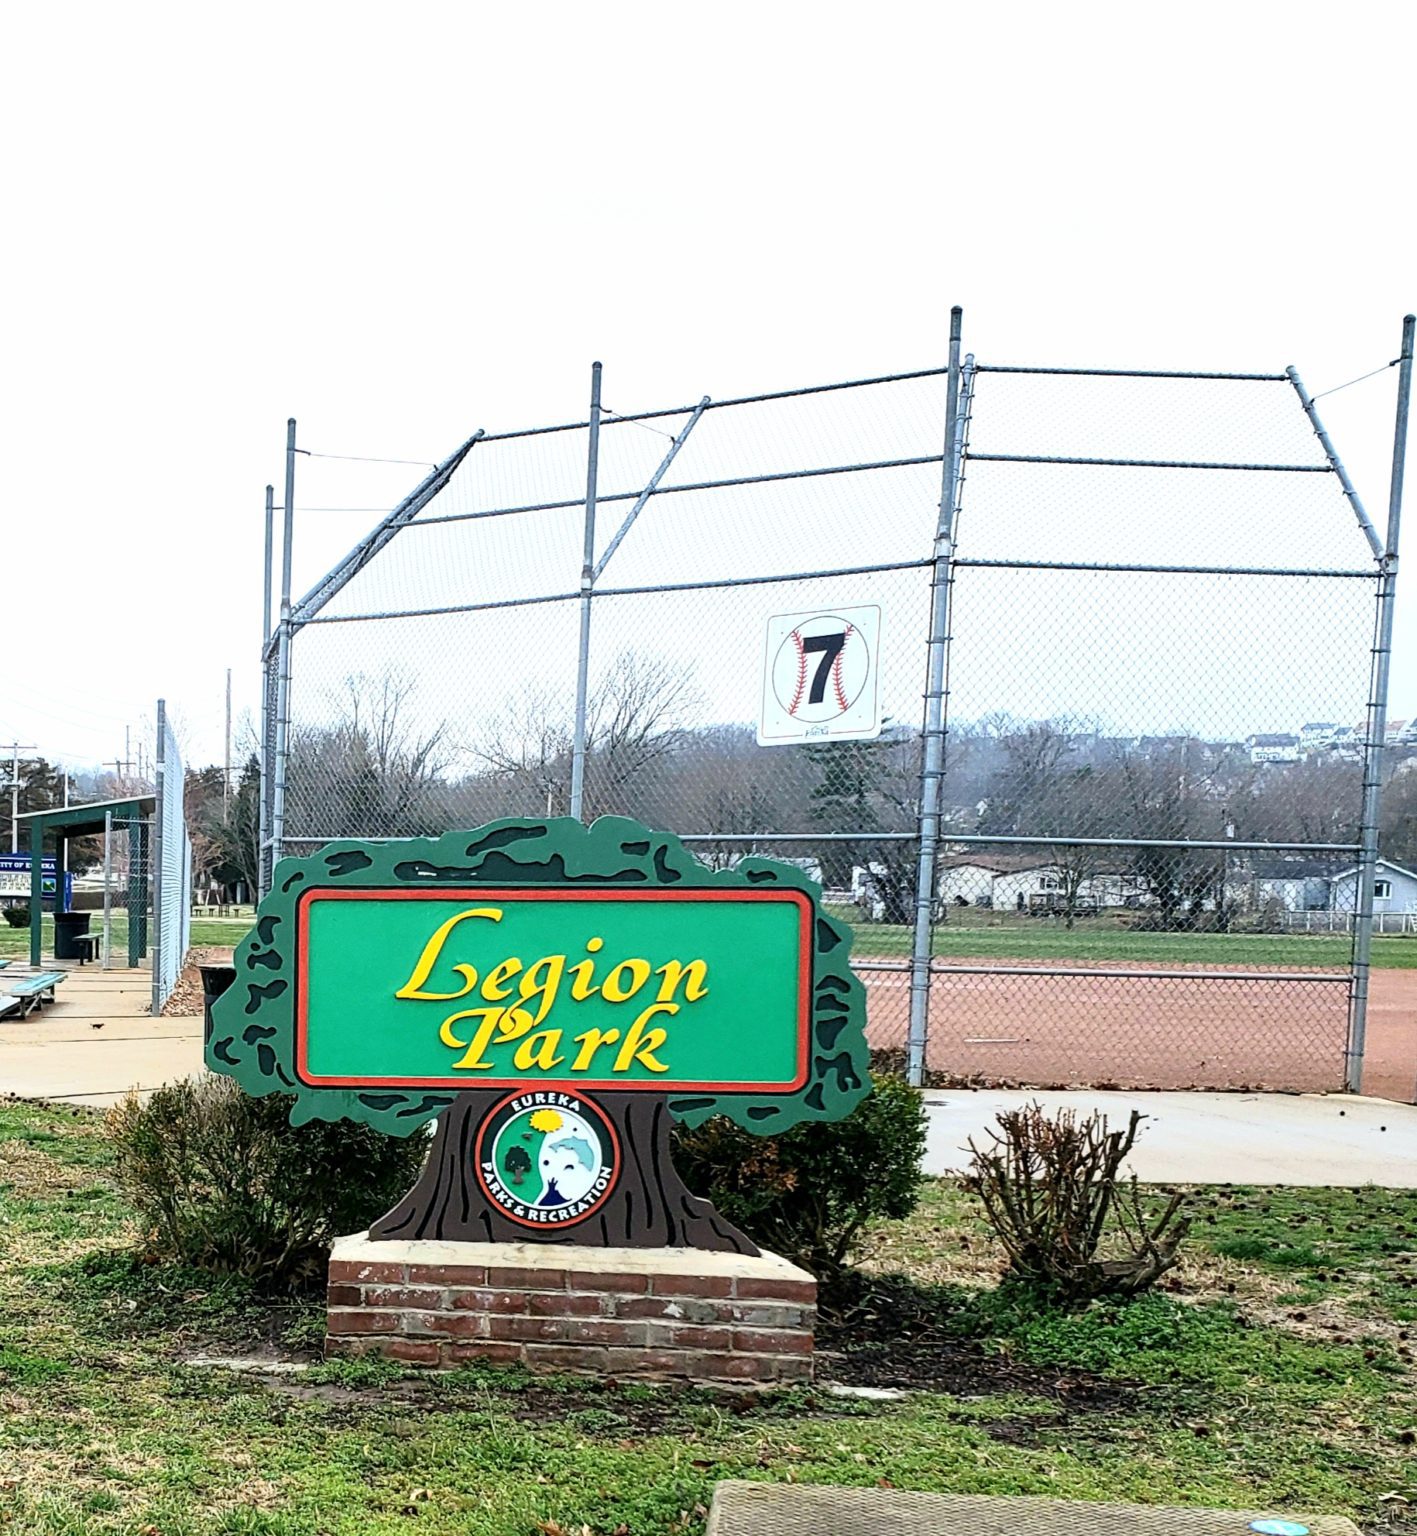 Baseball backstop behind a green Legion Park sign in Eureka